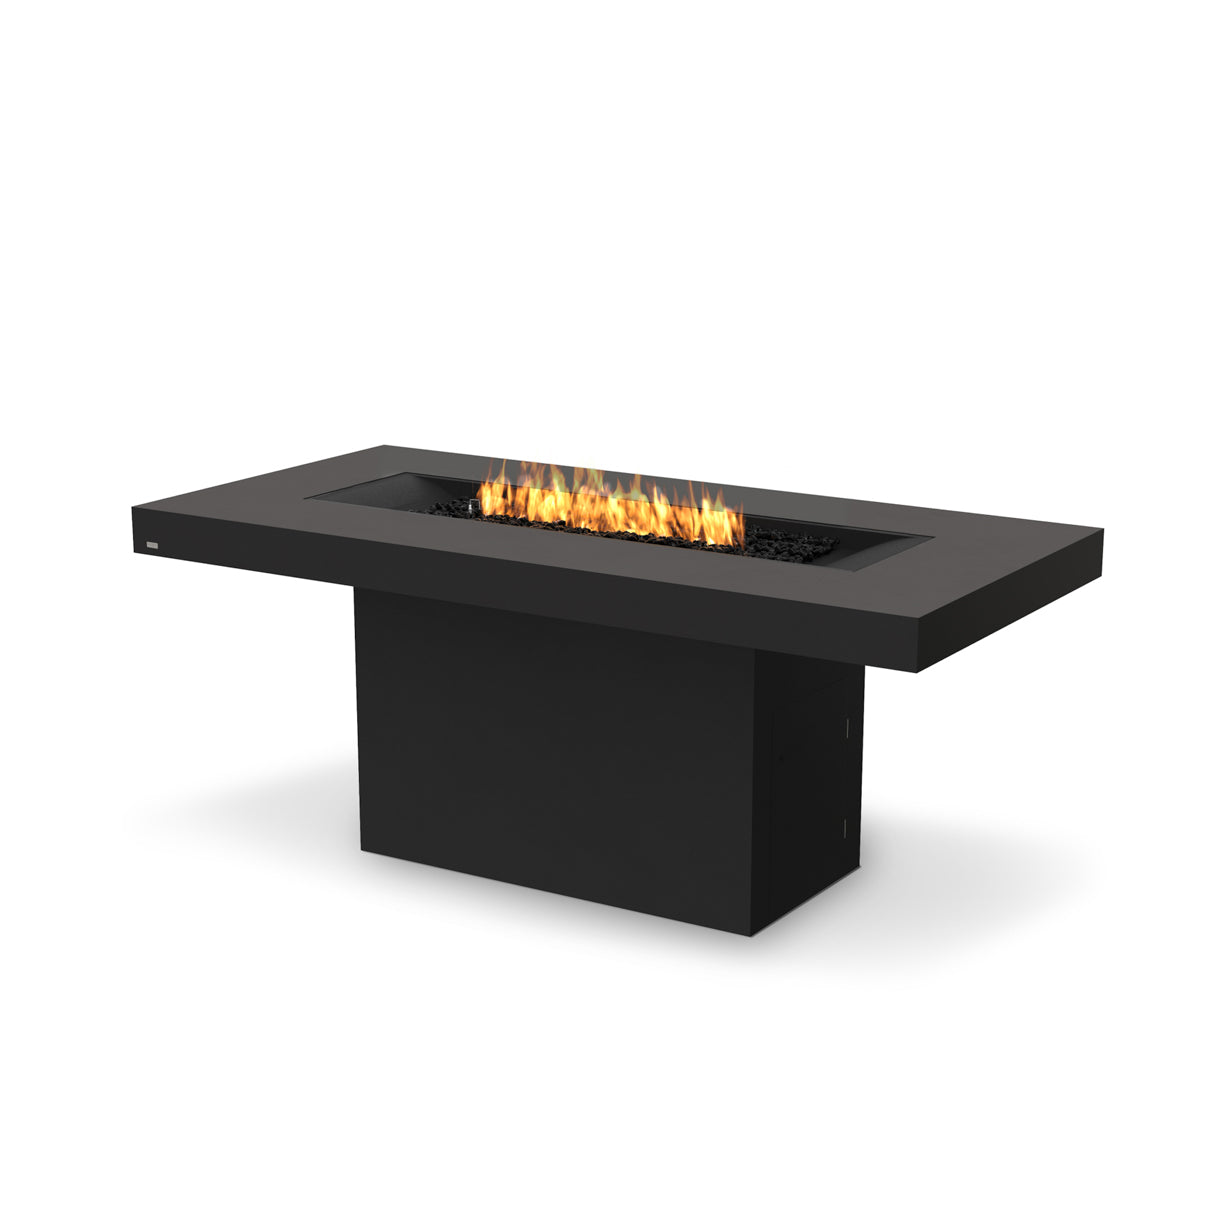 GIN 90 (BAR) FIRE PIT TABLE - NATURAL GAS / LIQUID PROPANE